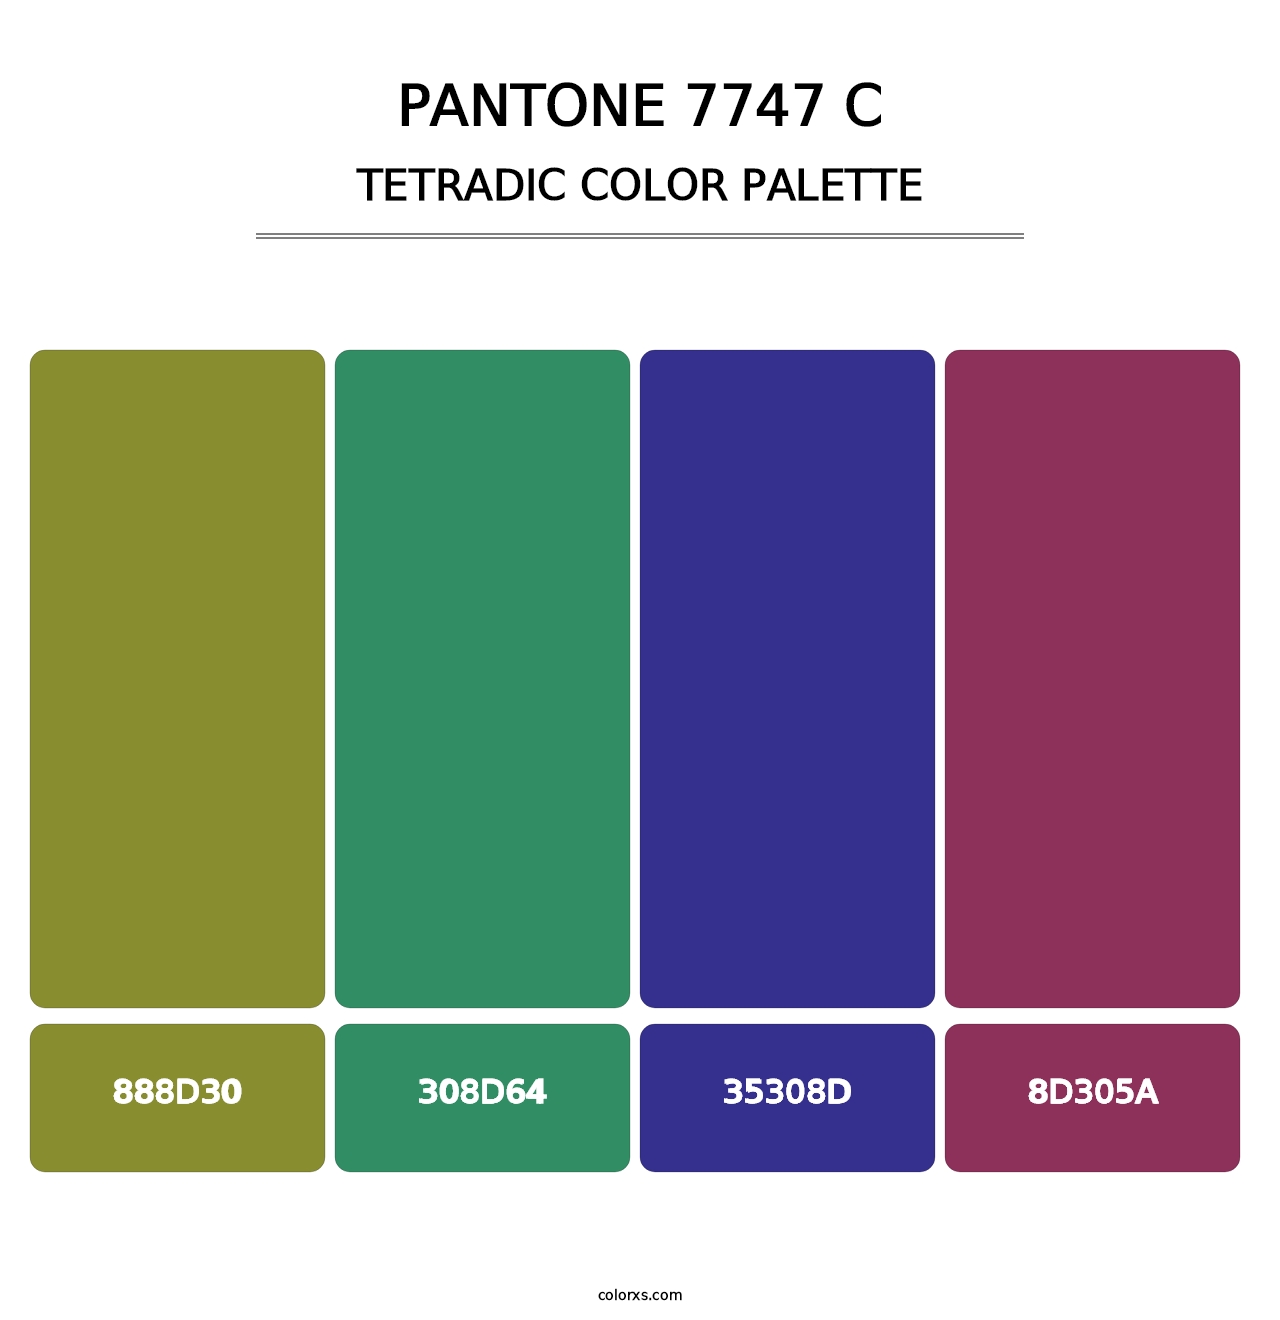 PANTONE 7747 C - Tetradic Color Palette